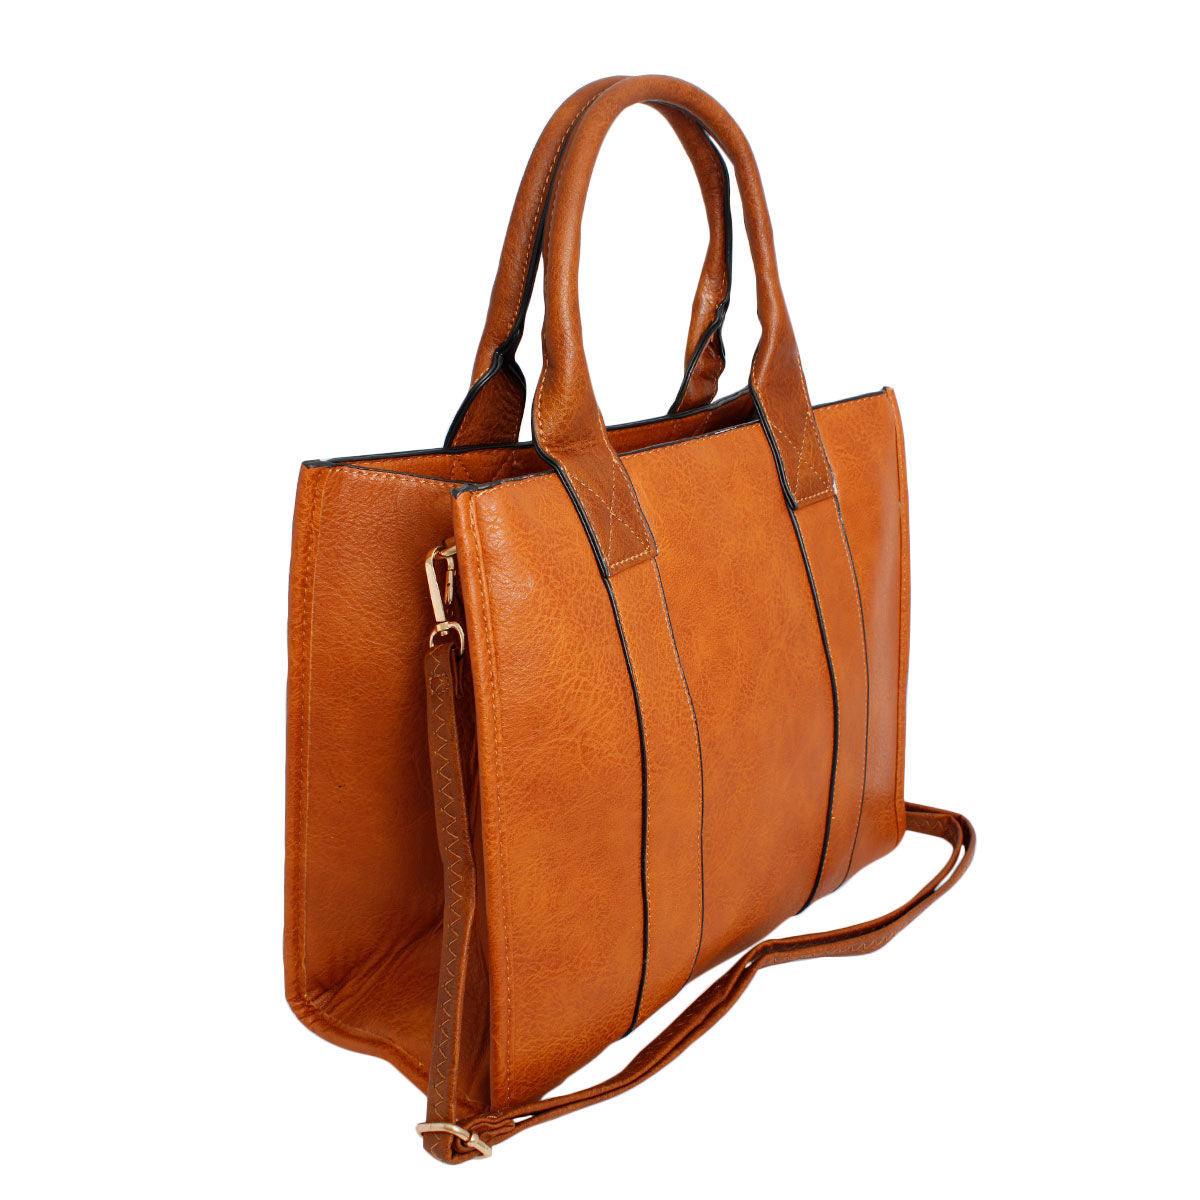 Camel Satchel Handbag with Wristlet: Your Perfect Fashion Accessory